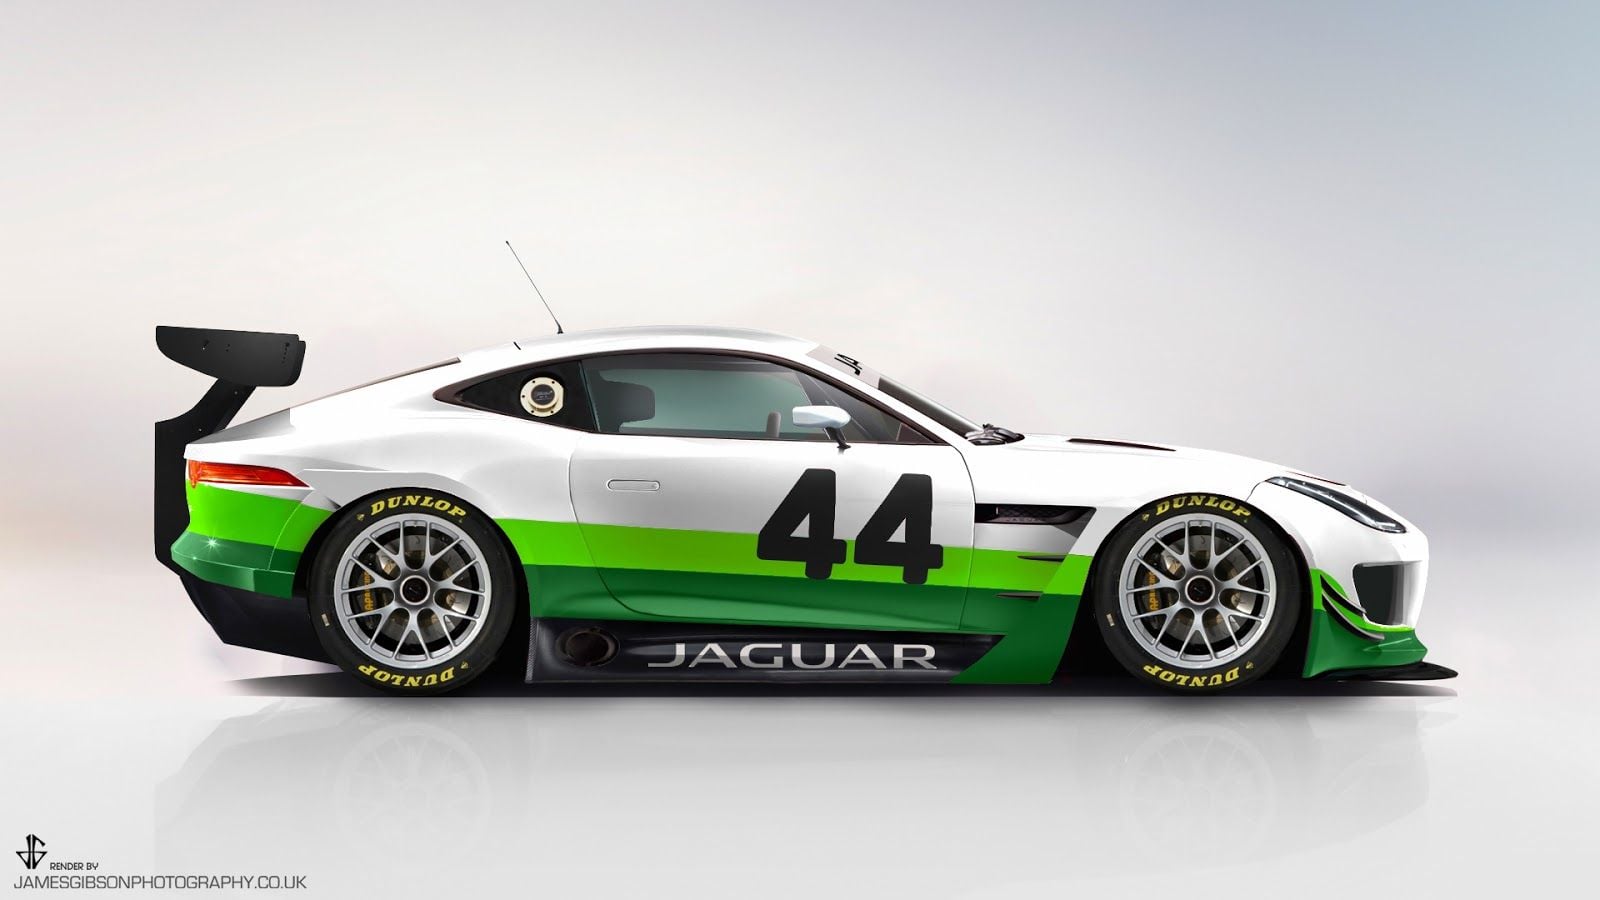 43 Jaguar F Type SVR GT4 (2018) 44 Matthew George, Steve M…